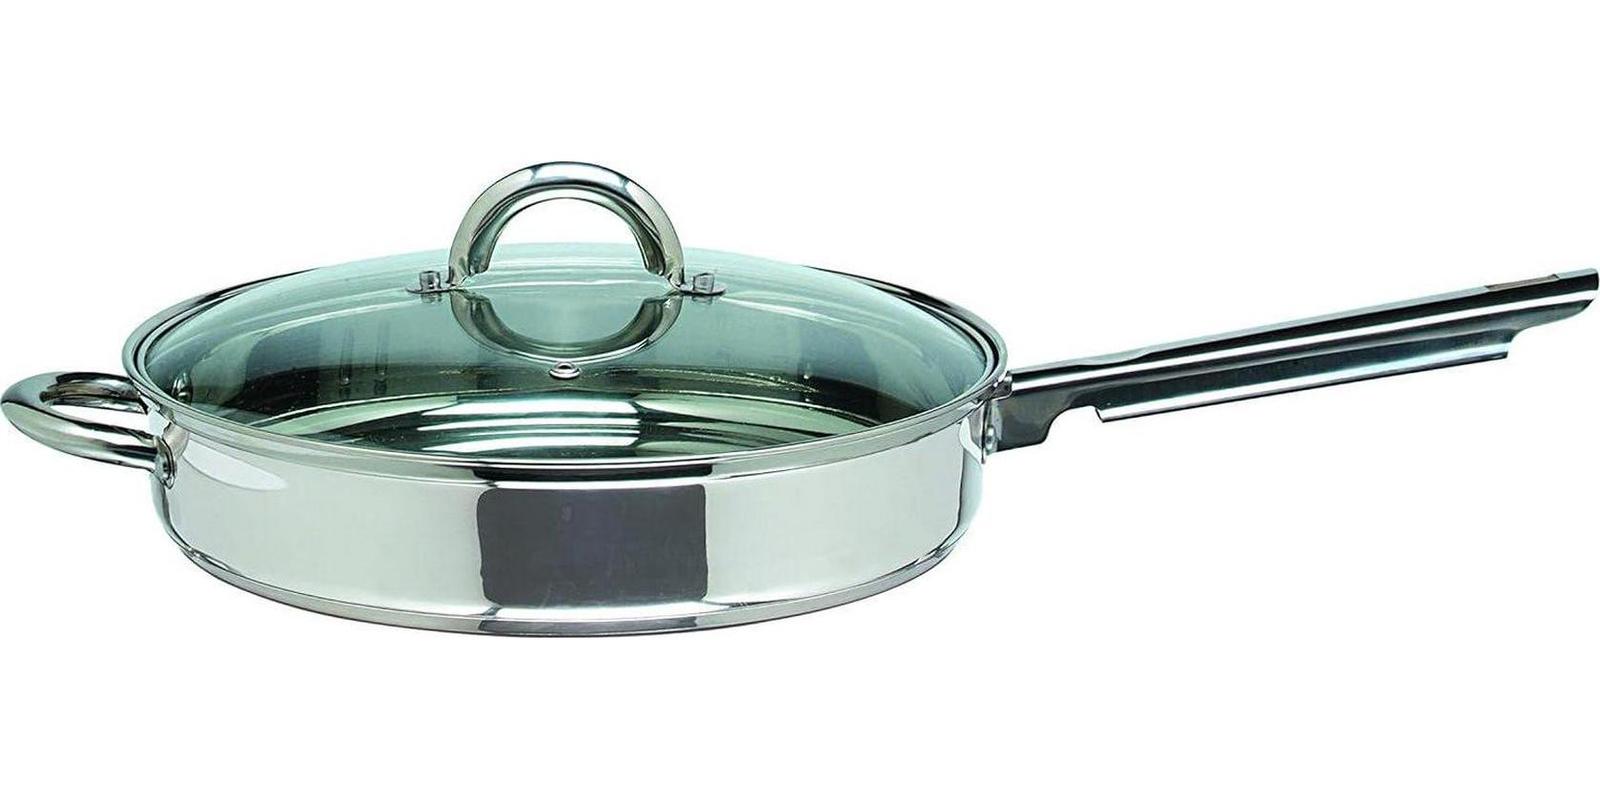 HLAFRG Pots and Pans Set Nonstick, Blue Granite Induction Kitchen Cookware  Sets, 14 Pcs Non Stick Cooking Set, Pans & Pots & Steamer,Oven Safe